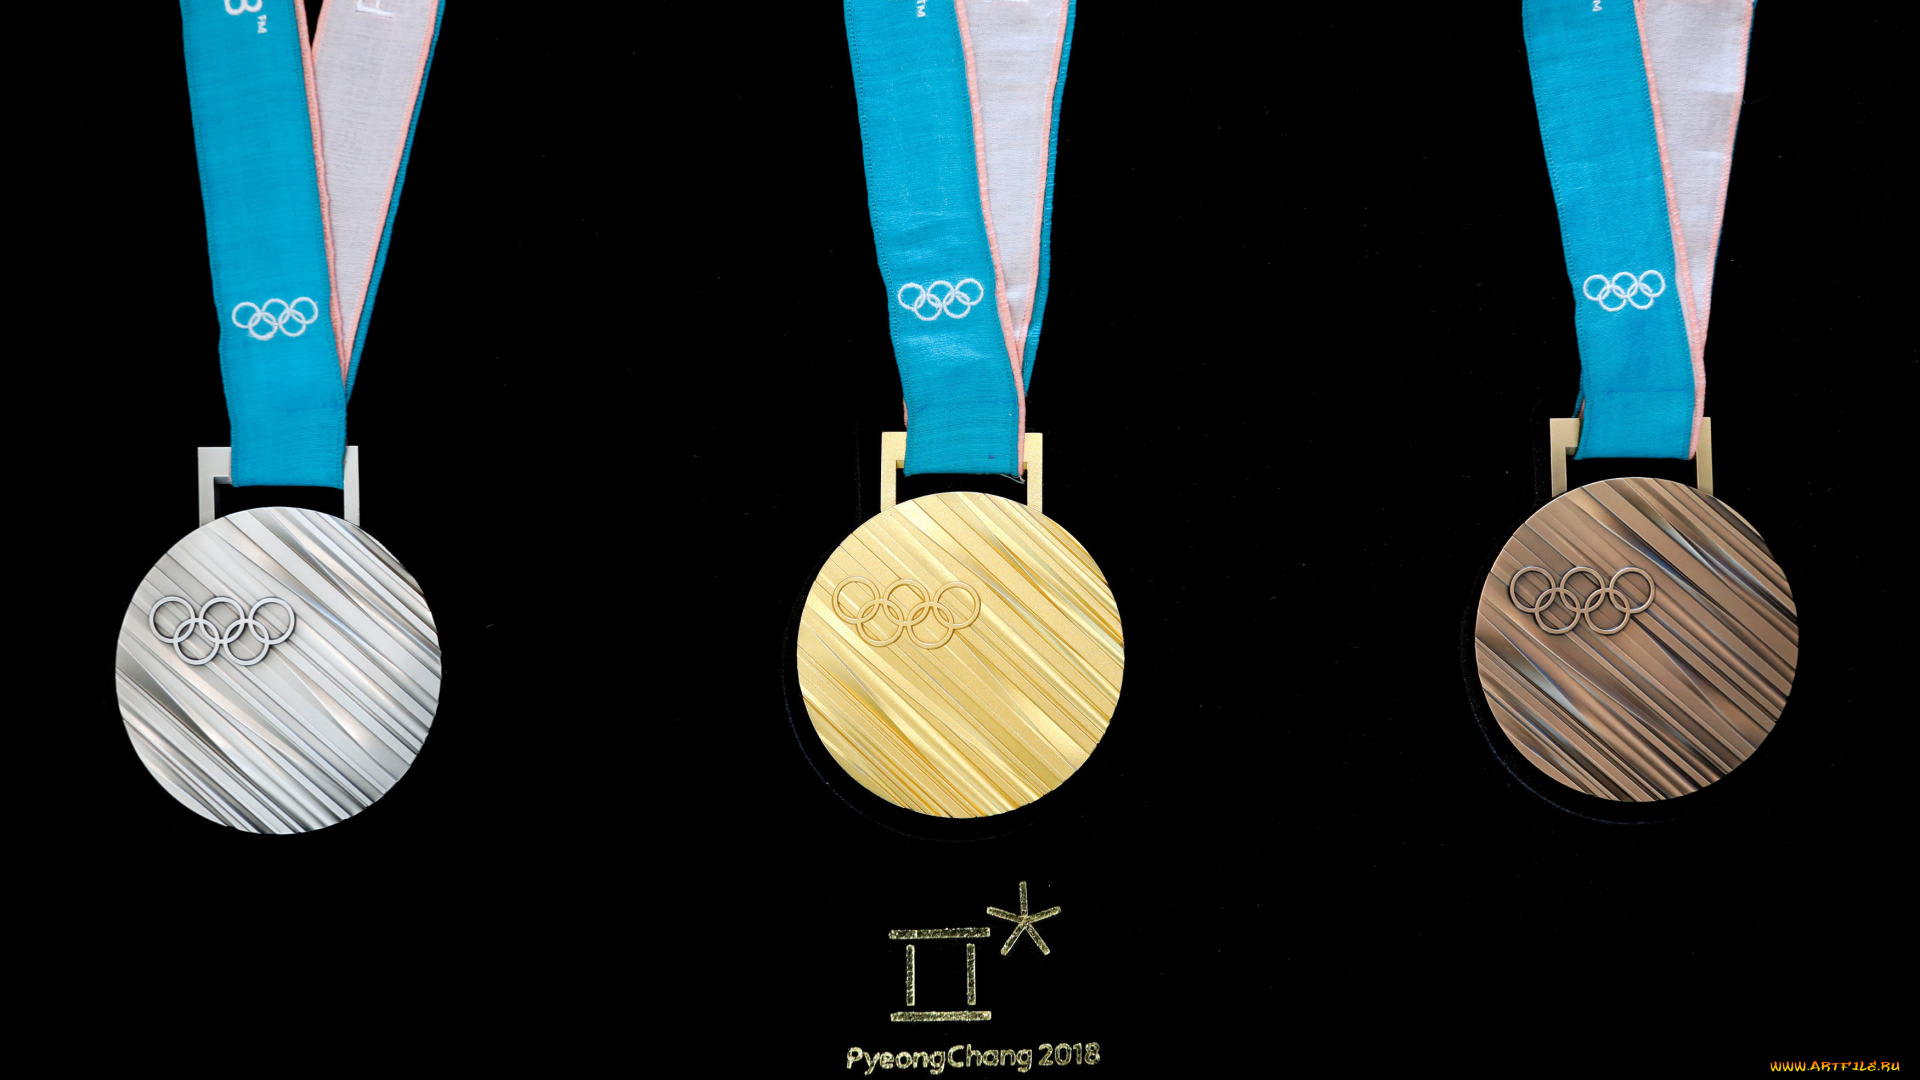 спорт, -, другое, на, черном, фоне, три, медали, зимних, олимпийских, игр, 2018